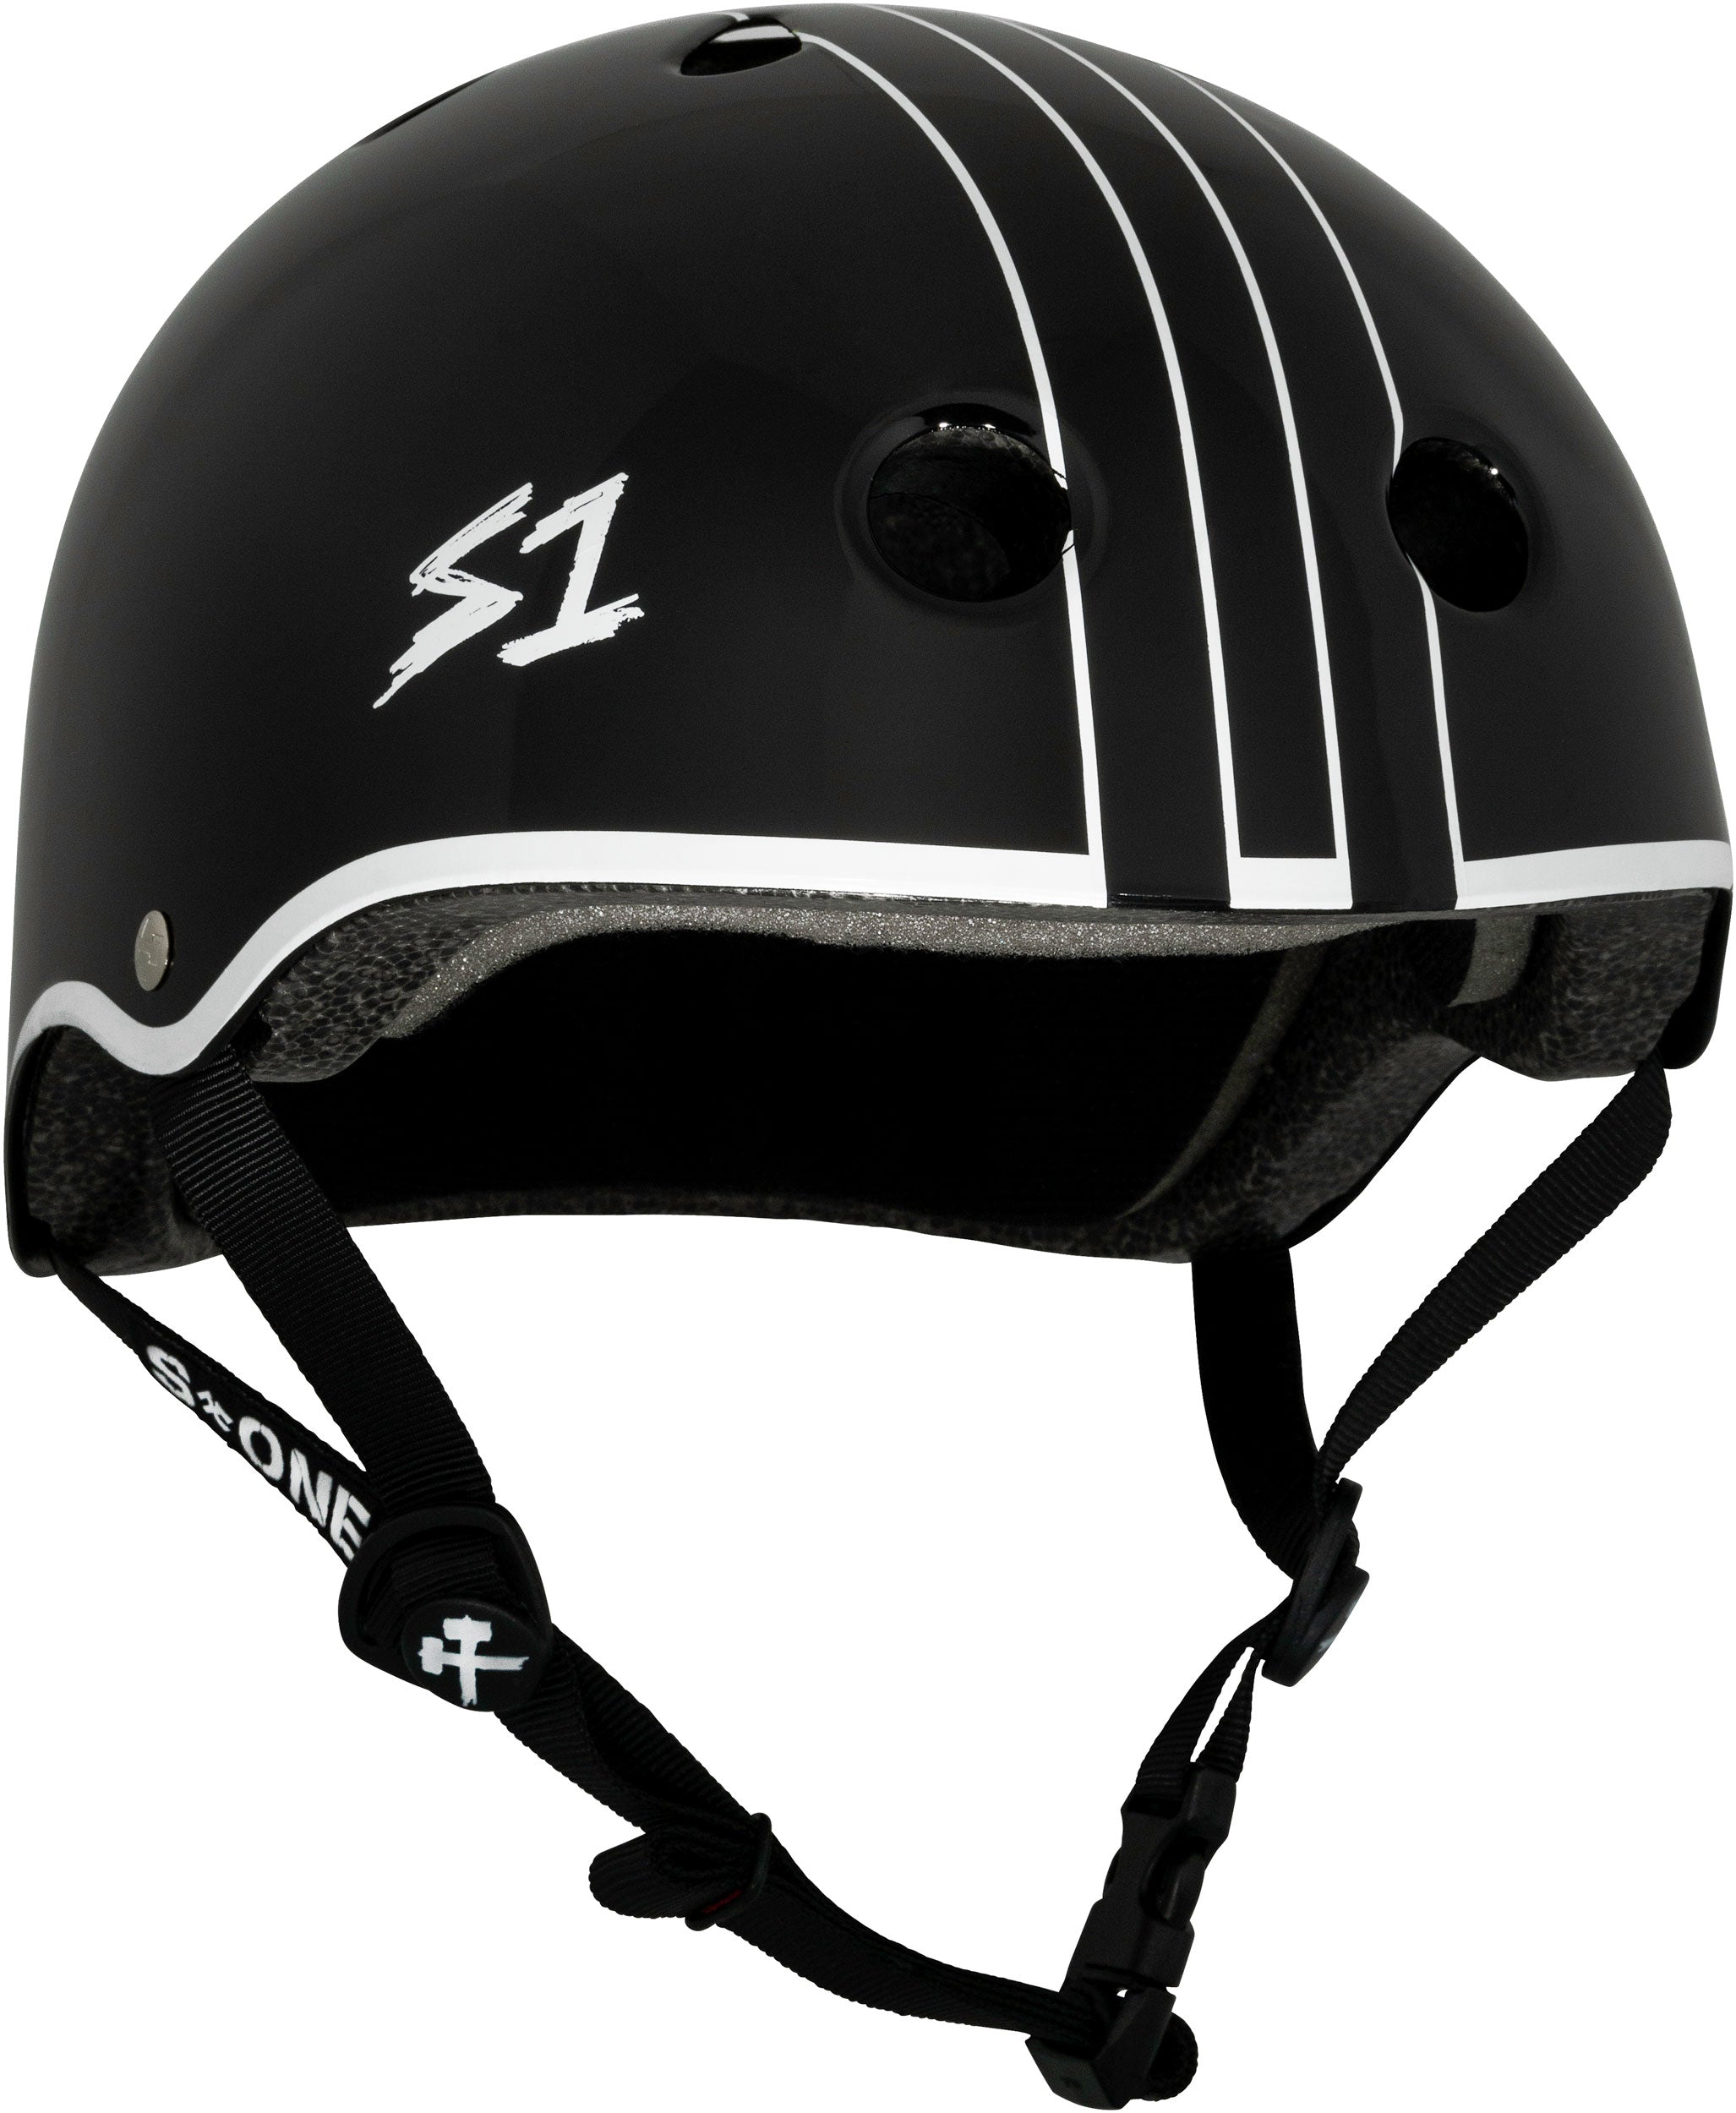 S1 Lifer Helmet - Casque Noir Collab Gavo